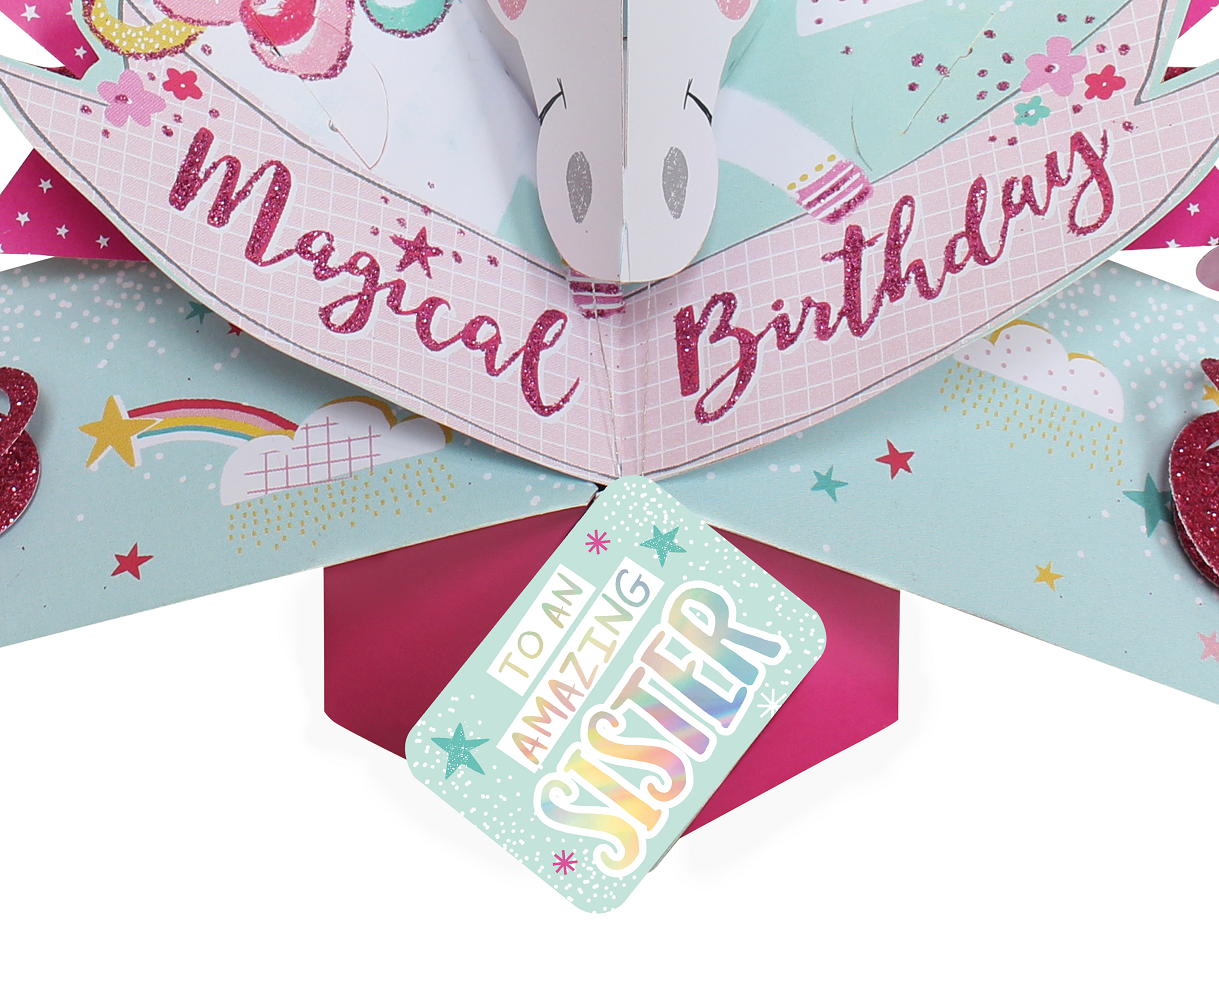 Amazing Sister Magical Unicorn Birthday Pop-Up Greeting Card